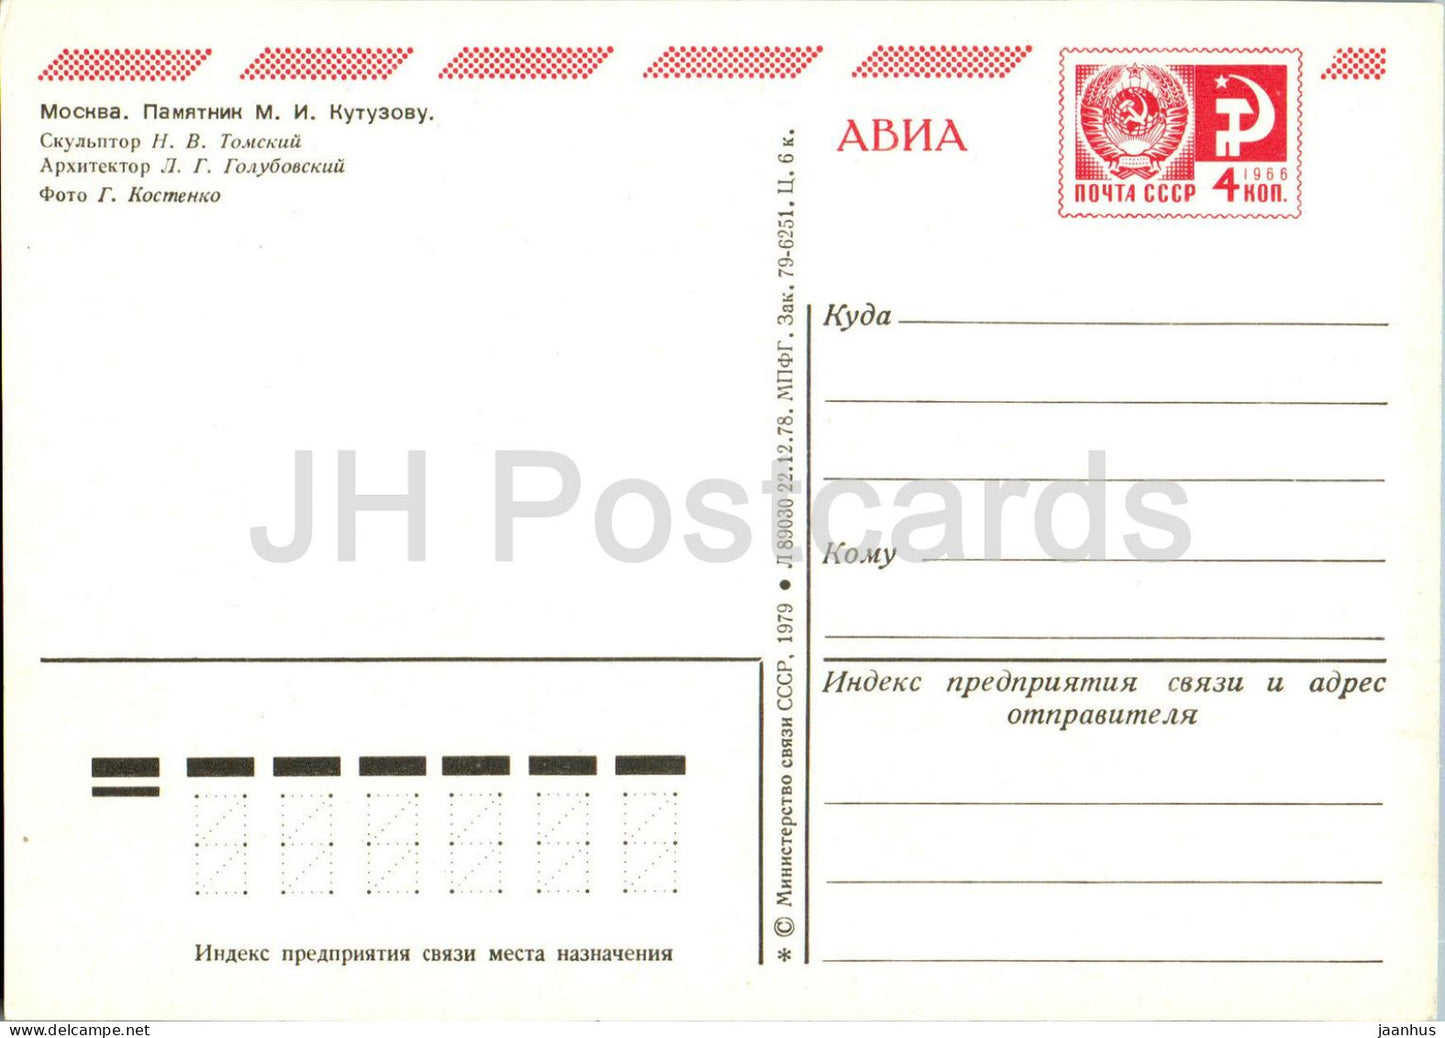 Moscow - monument to Kutuzov - horse - postal stationery - AVIA - 1979 - Russia USSR - unused